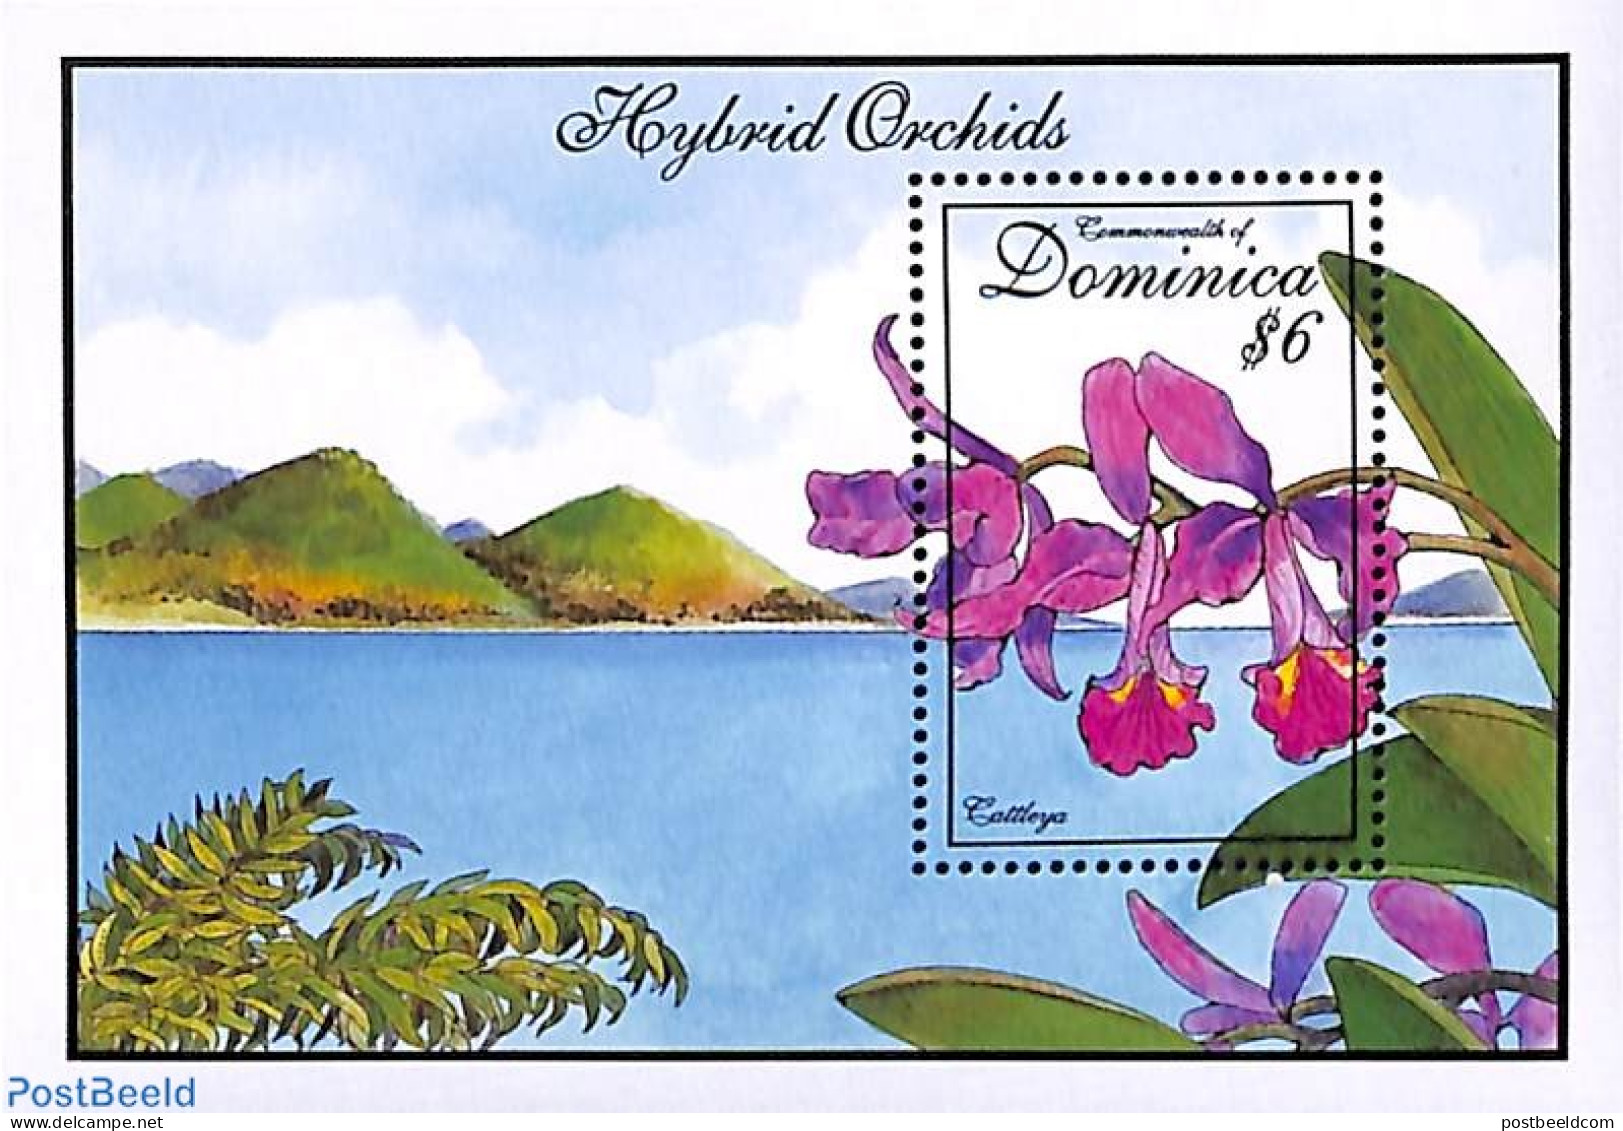 Dominica 1994 Orchids S/s, Mint NH, Nature - Flowers & Plants - Orchids - Repubblica Domenicana